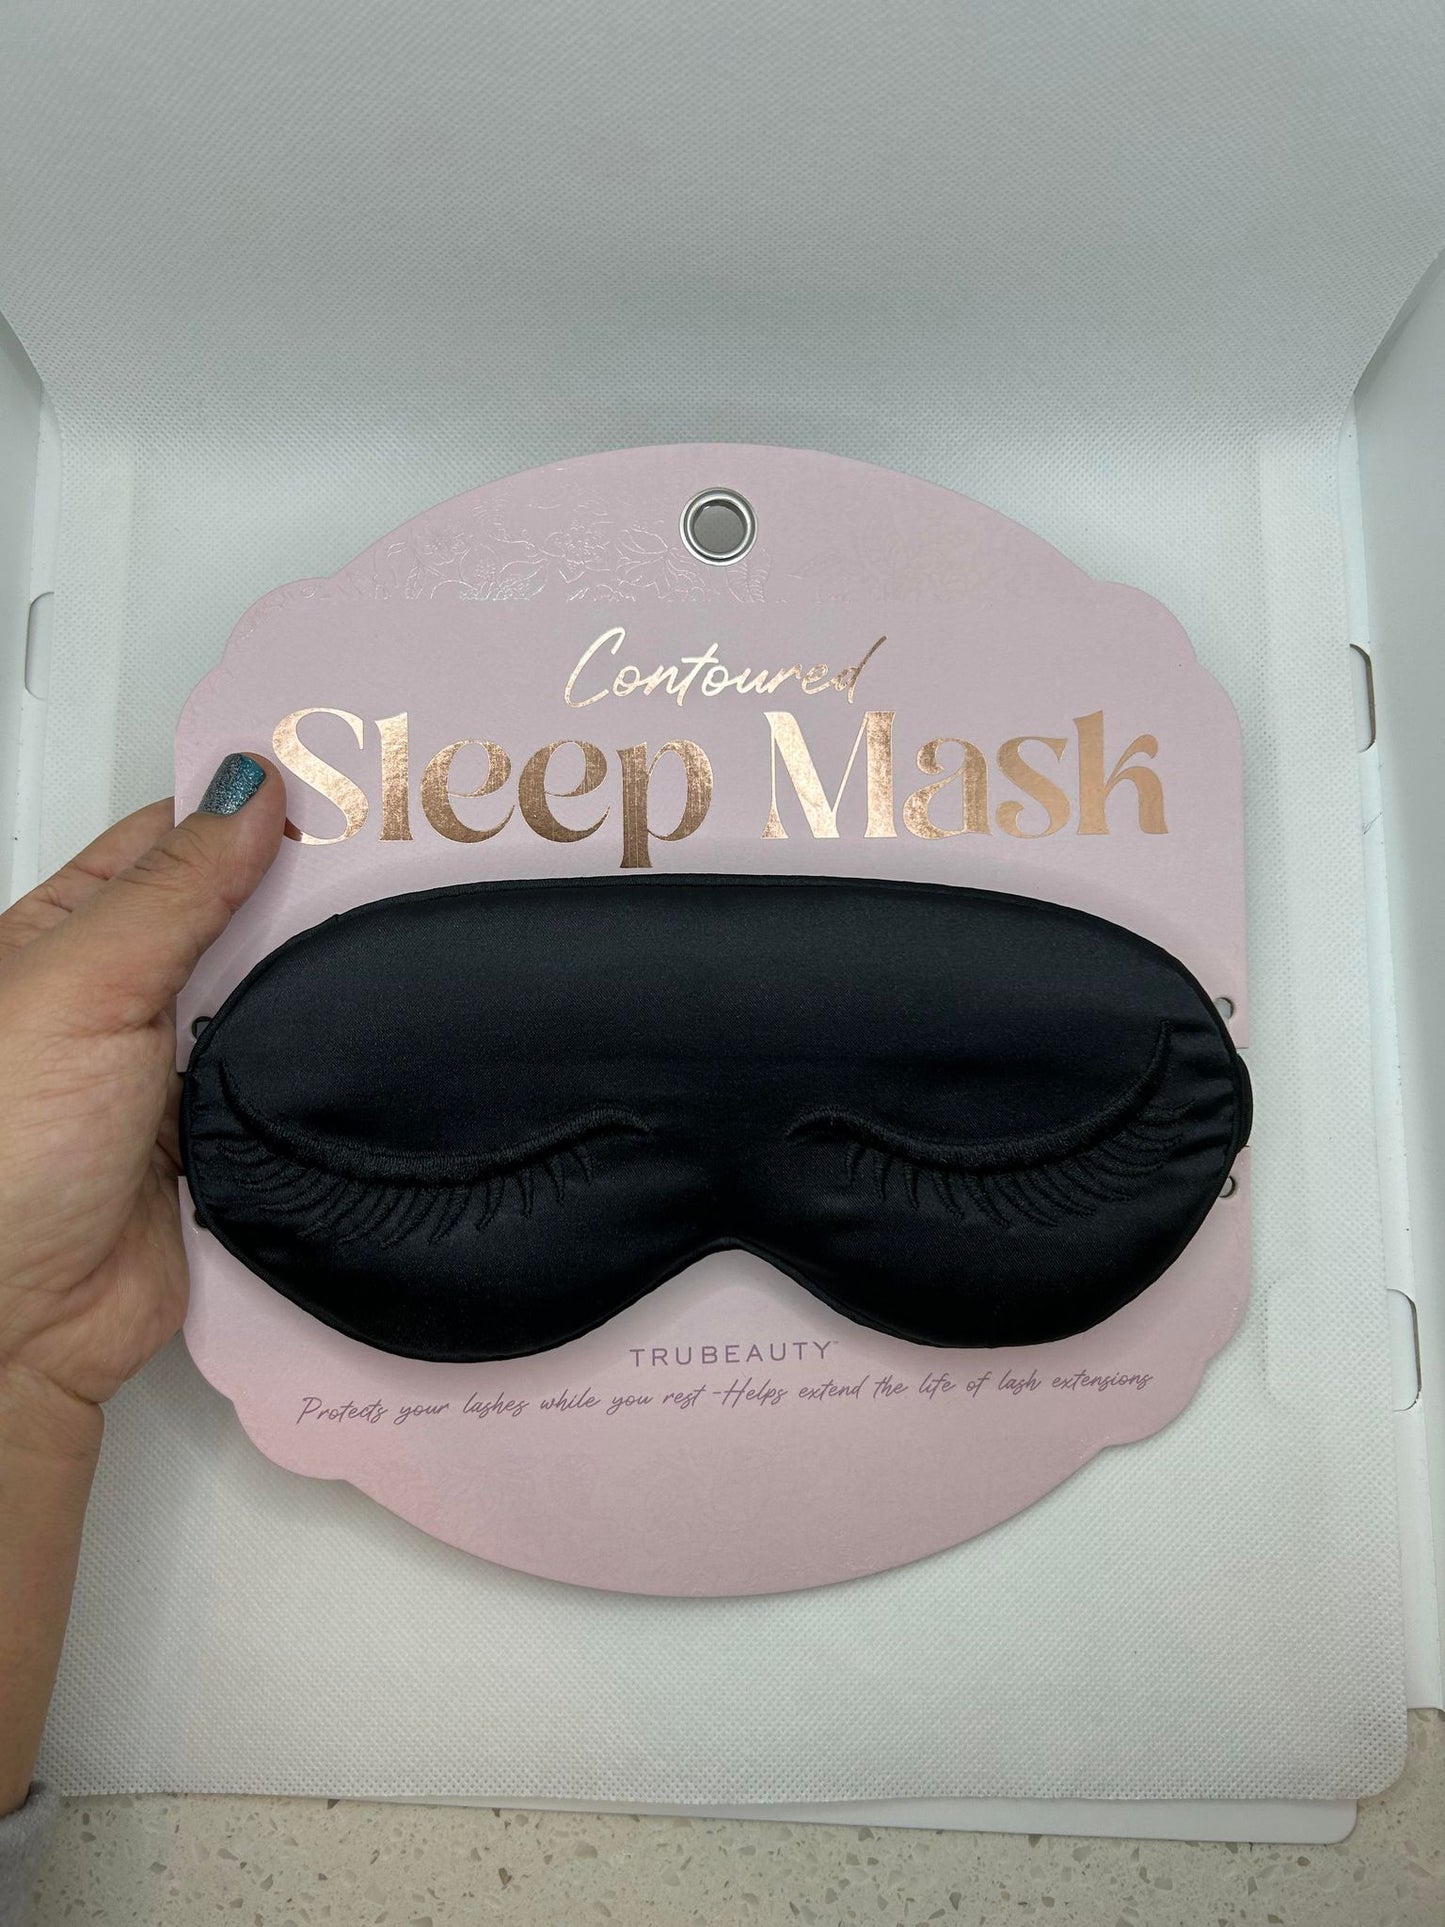 Silk Contoured Sleep Mask